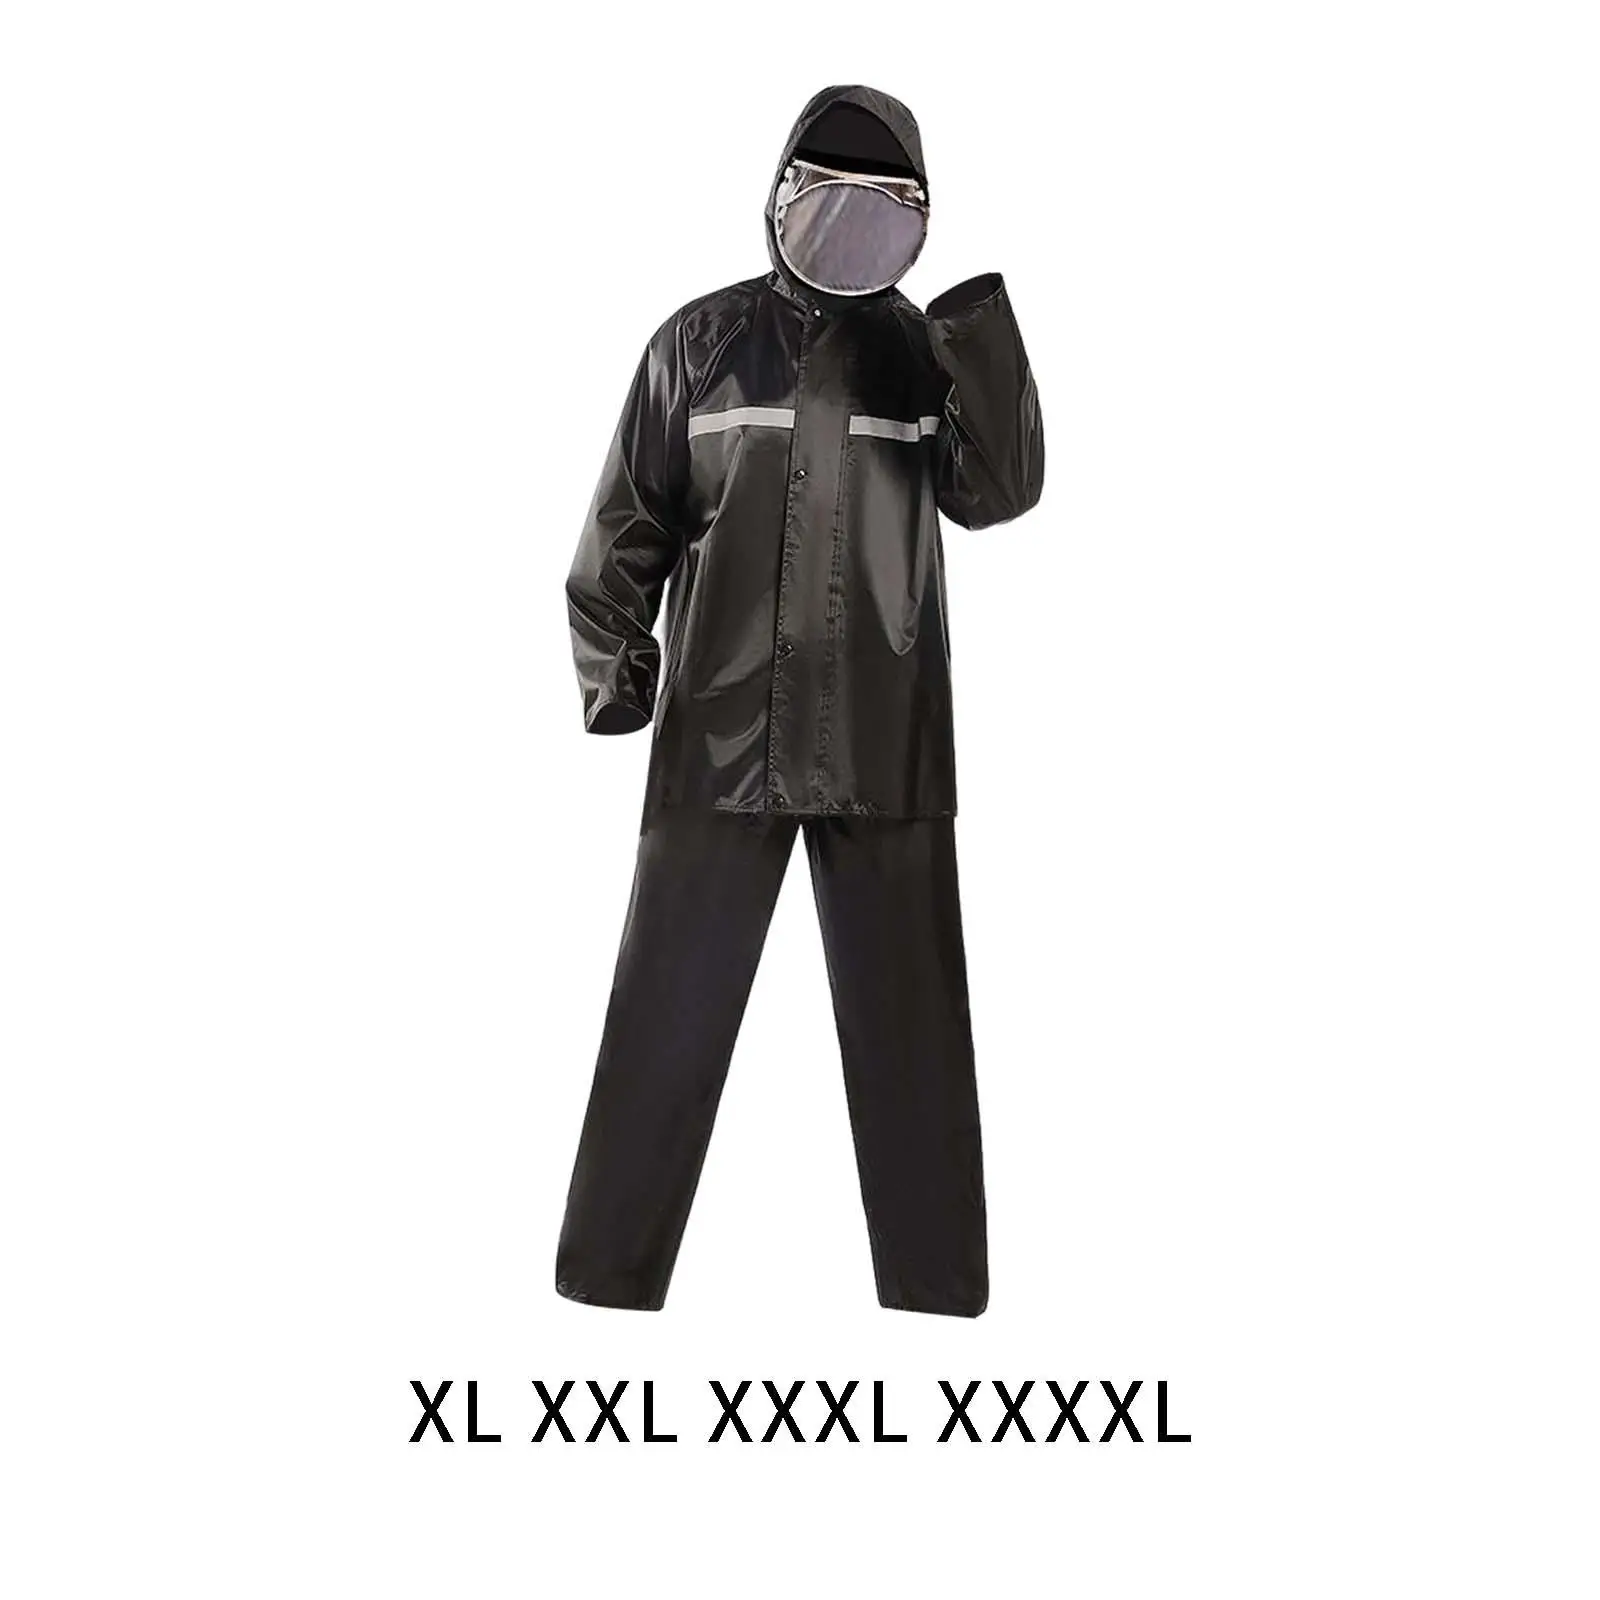 Impermeable Raincoat Men Rain Coat Suits Outdoor Motorcycle Rainwear Rain Gear Poncho